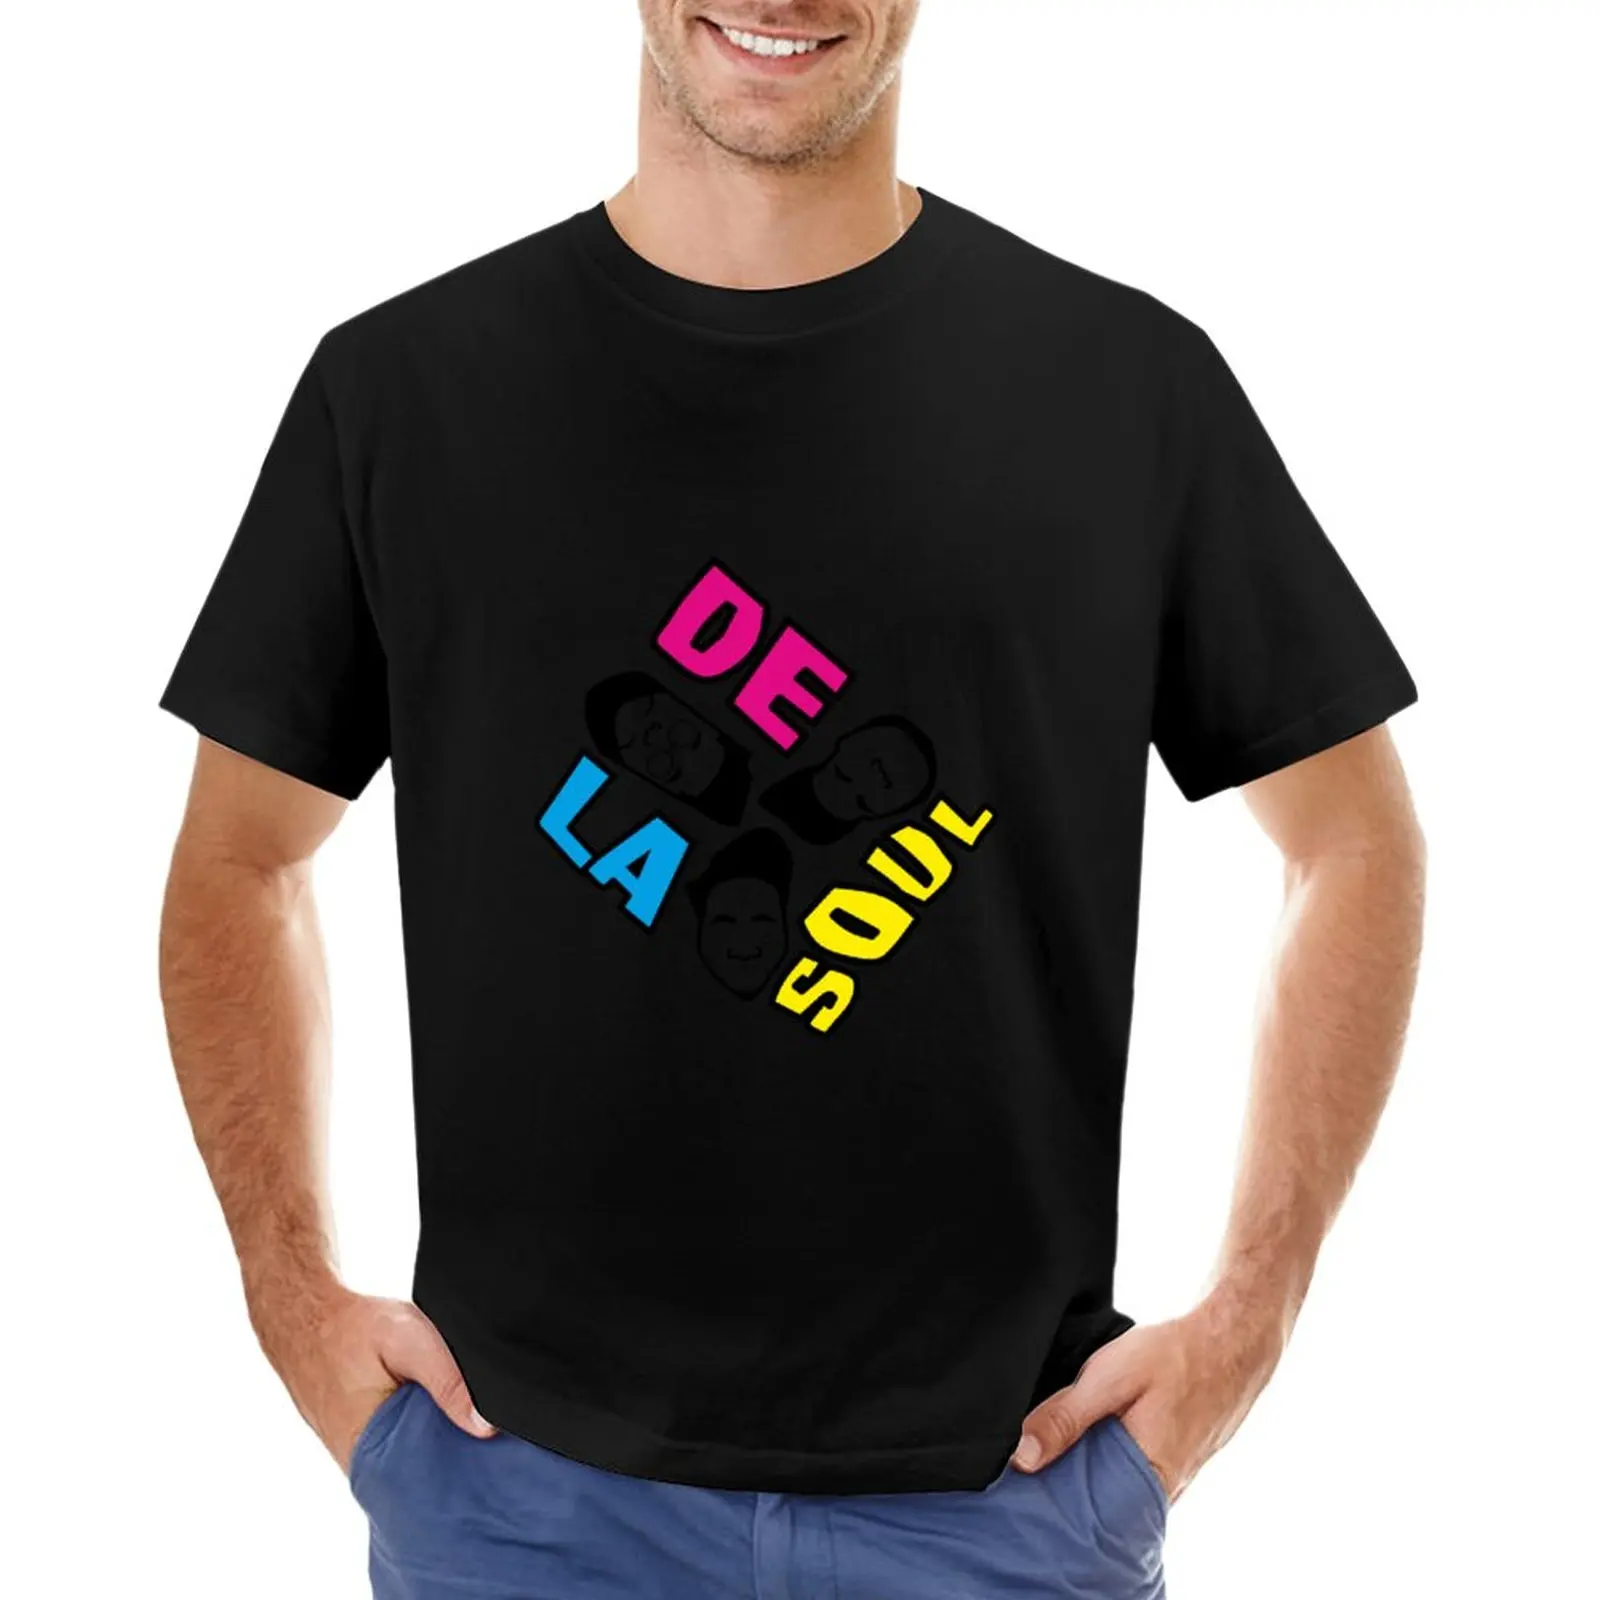 

Футболка De La Soul, короткая футболка, одежда аниме, Мужская одежда, тяжелые футболки для мужчин